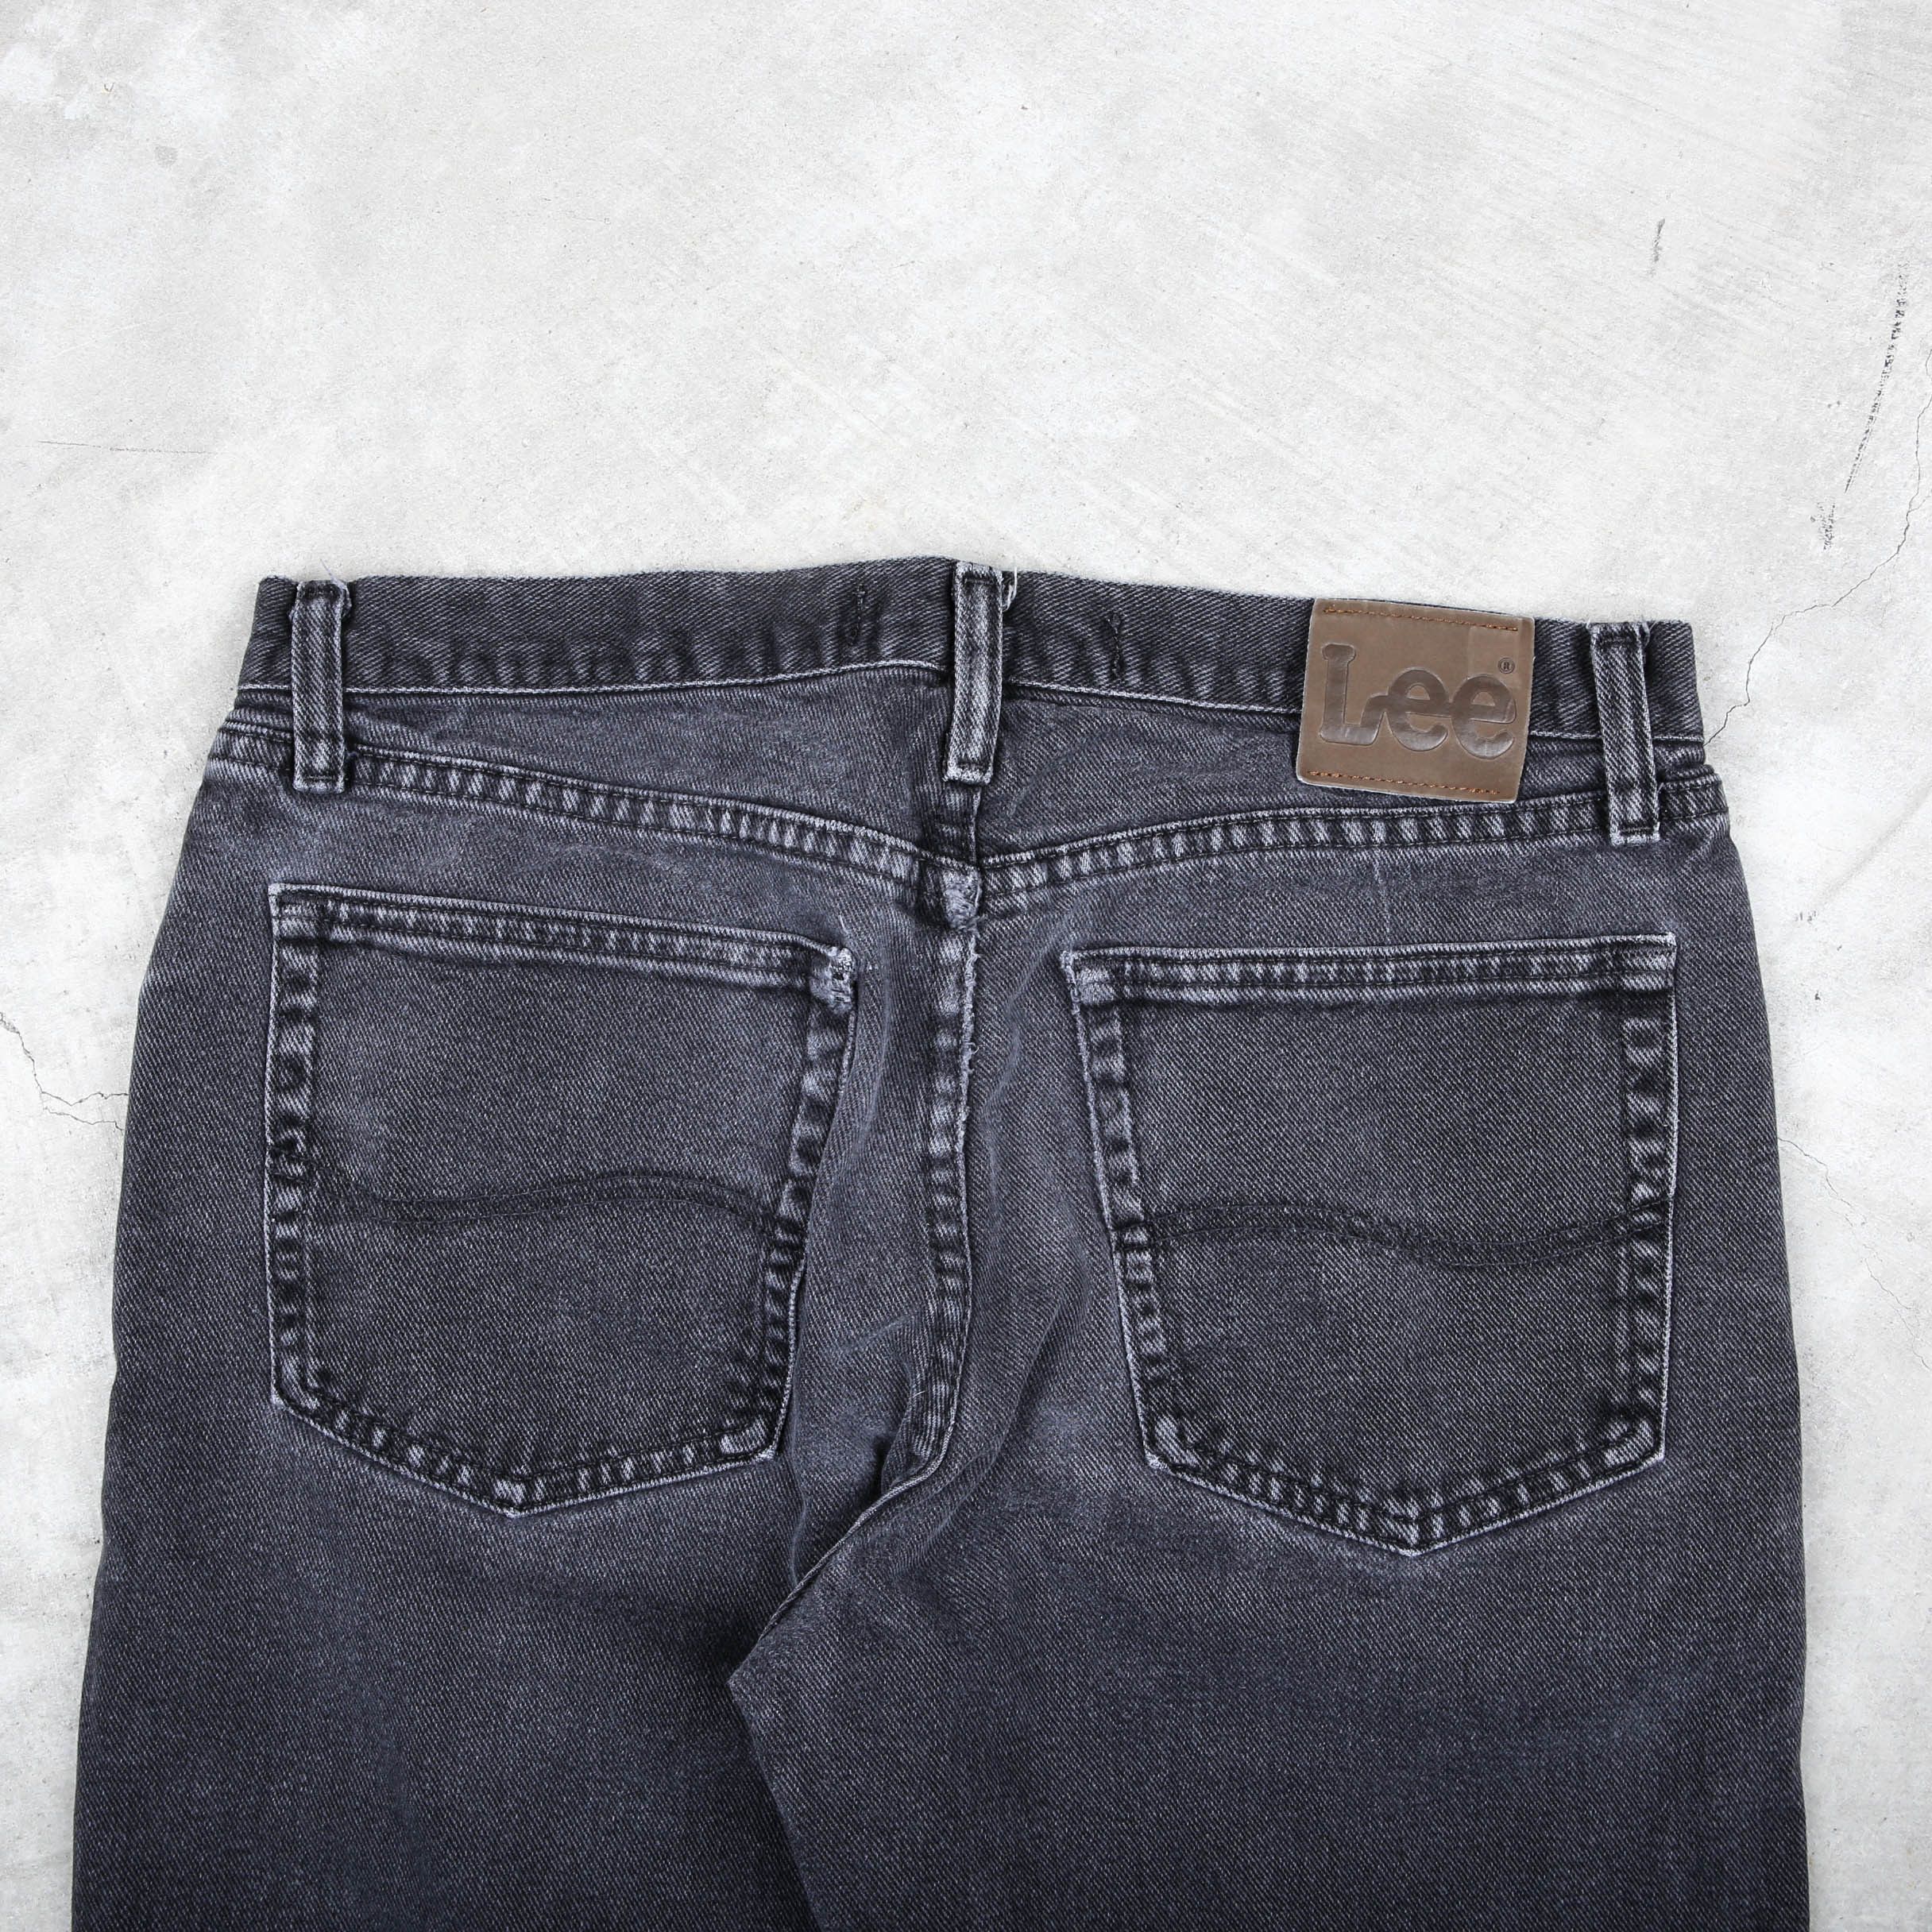 Vintage Vintage Lee's Denim Faded Jeans 33 Late 90s Size US 33 - 9 Thumbnail